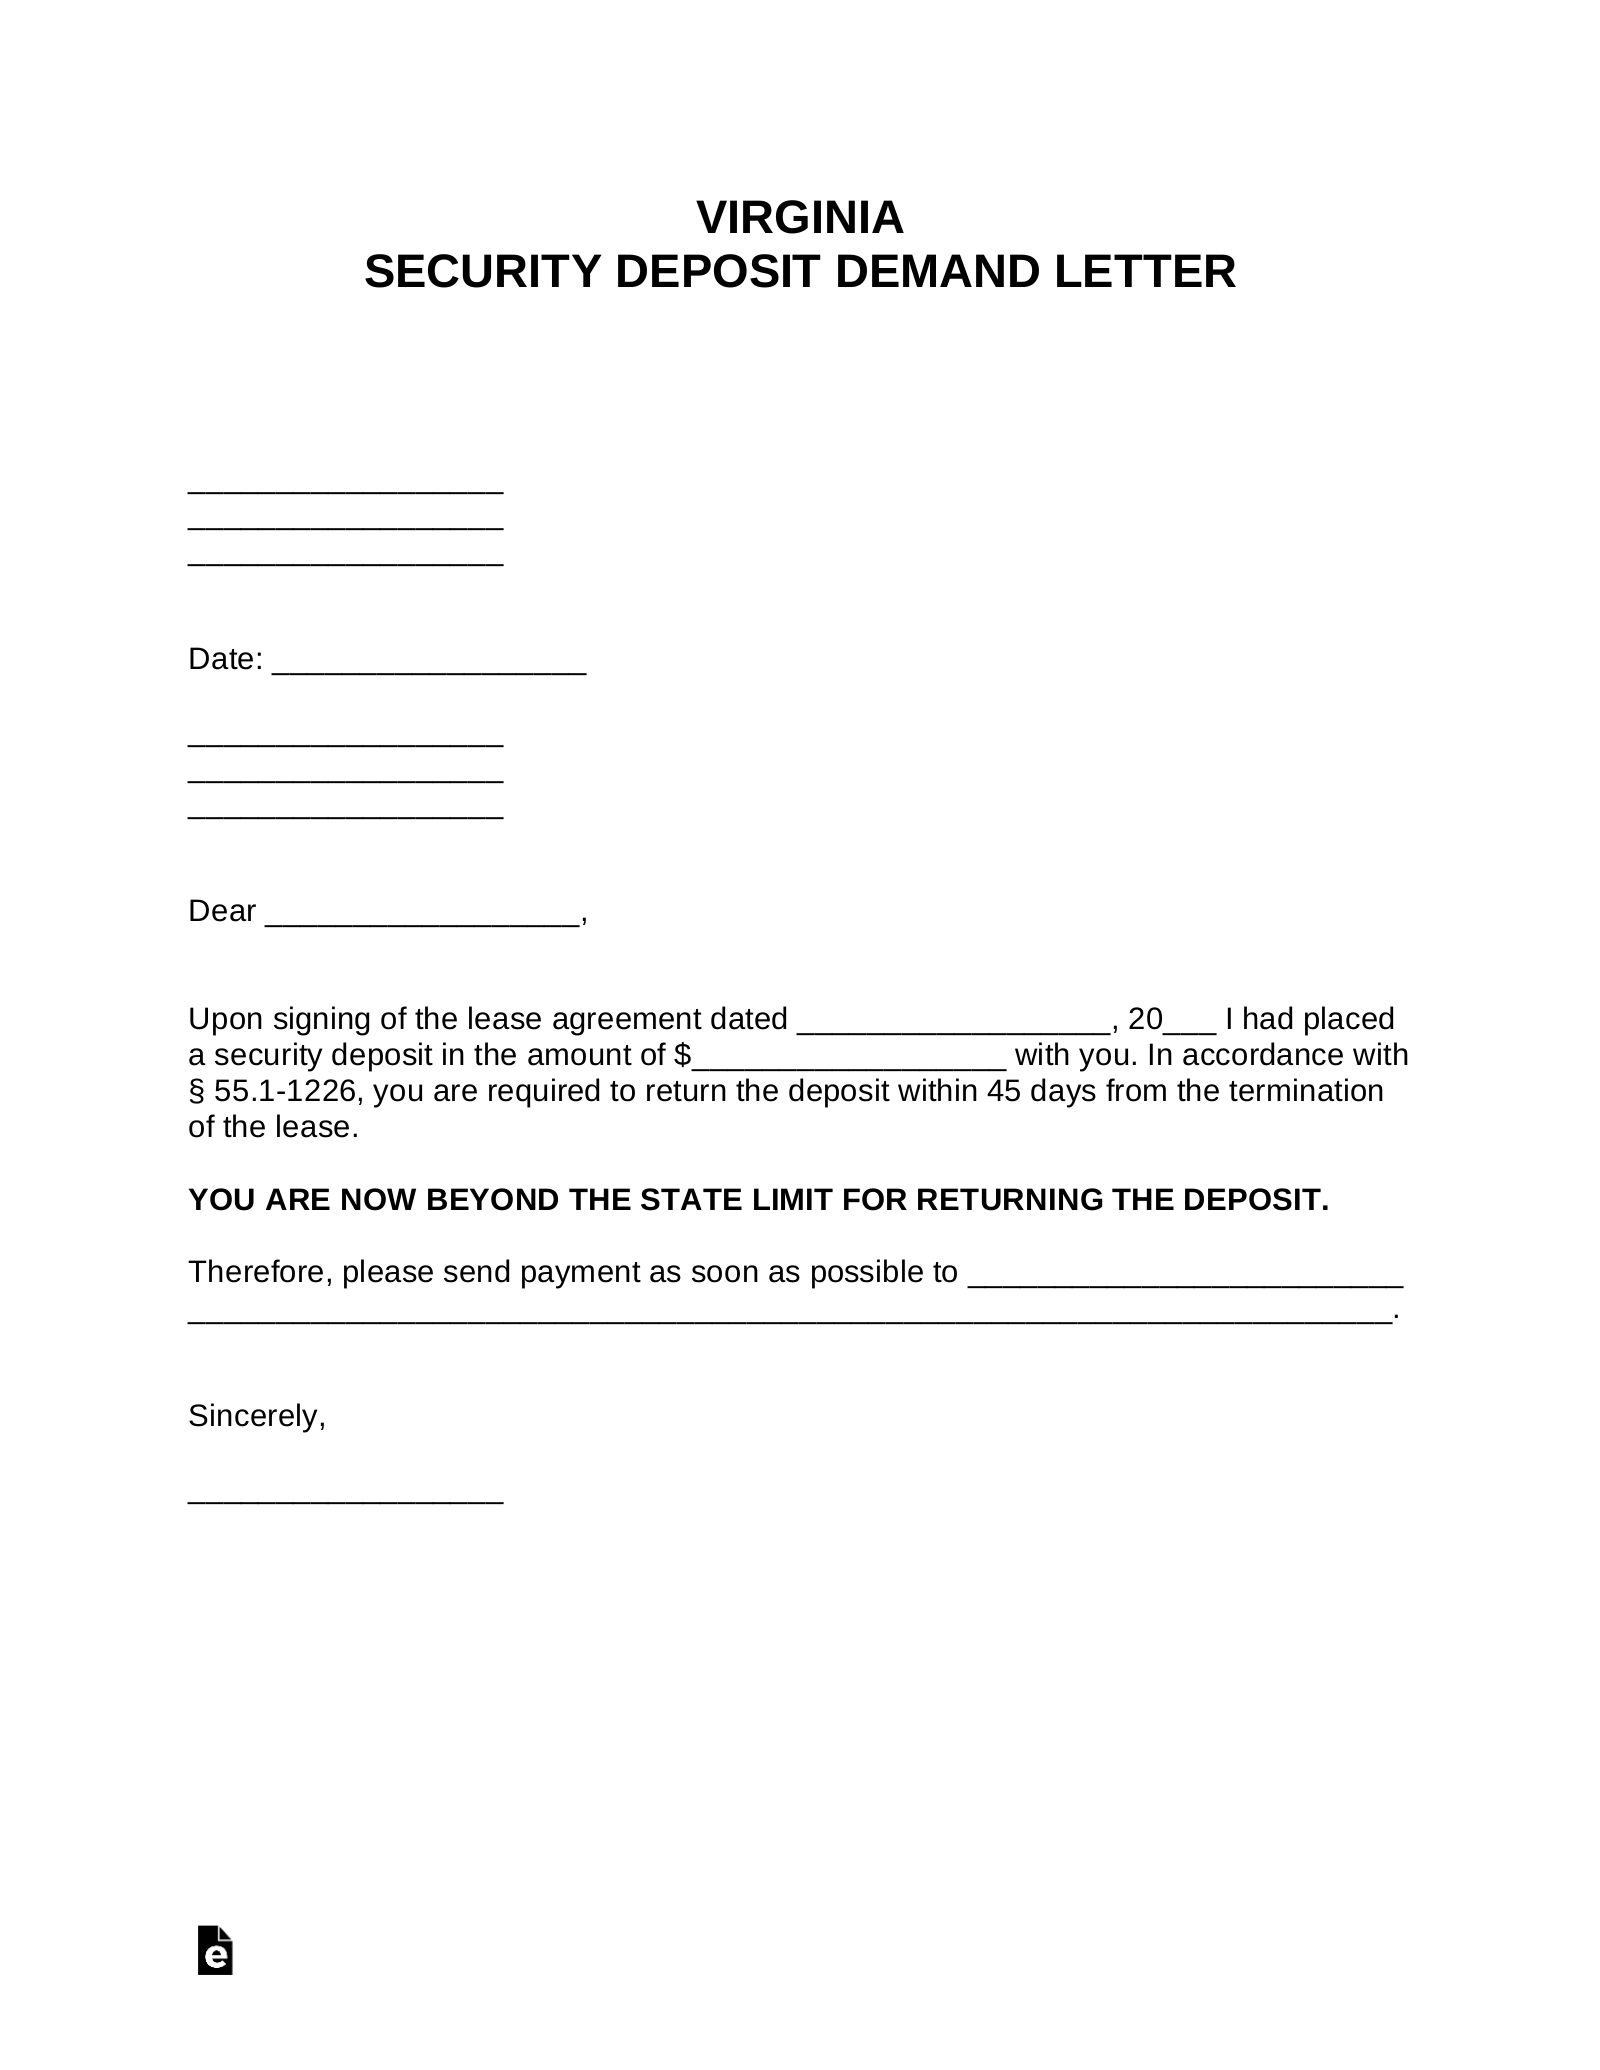 Virginia Security Deposit Demand Letter